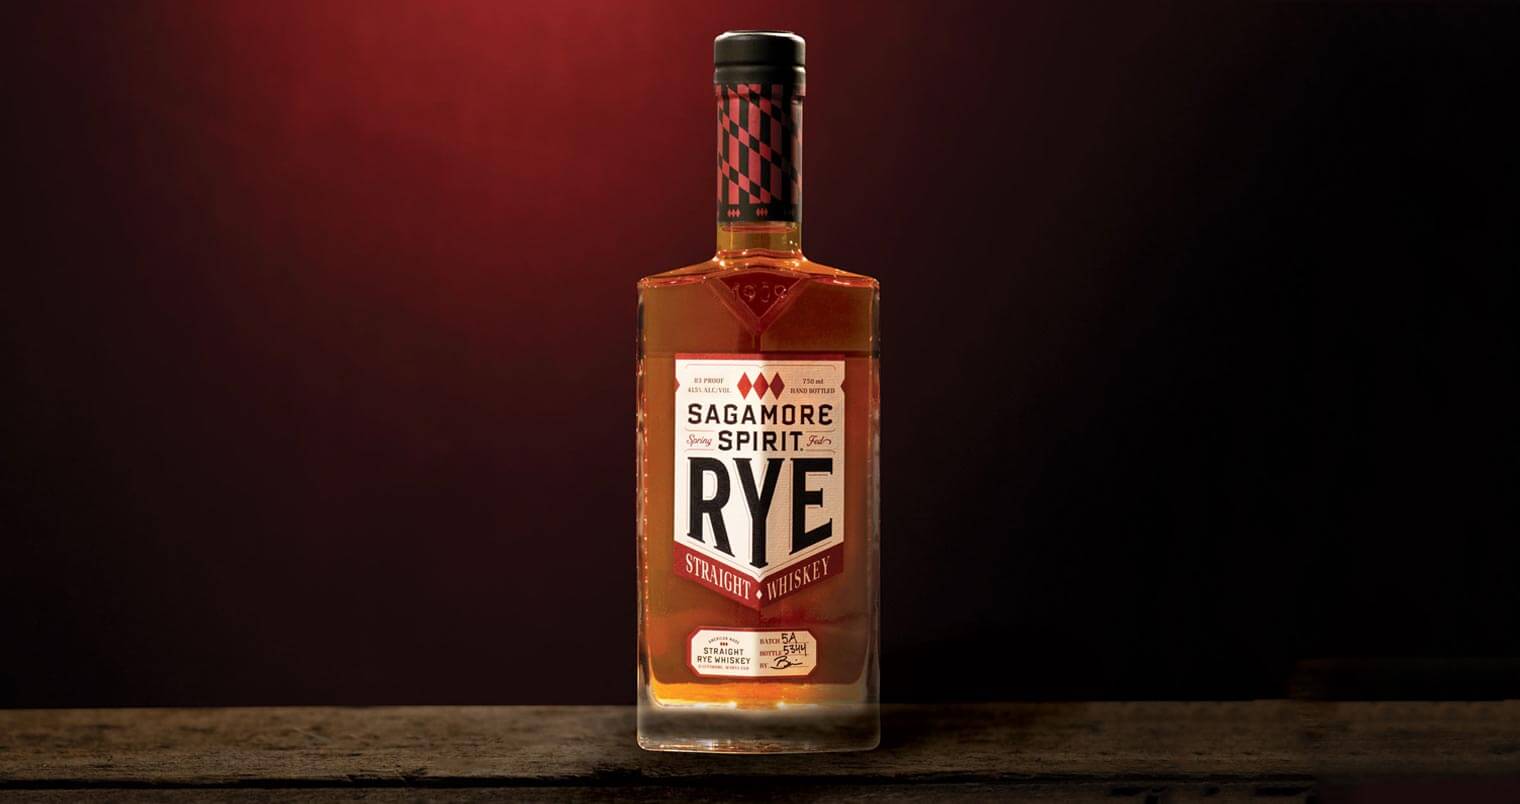 Sagamore Spirit Rye Whiskey, bottle on dark red back, featured image